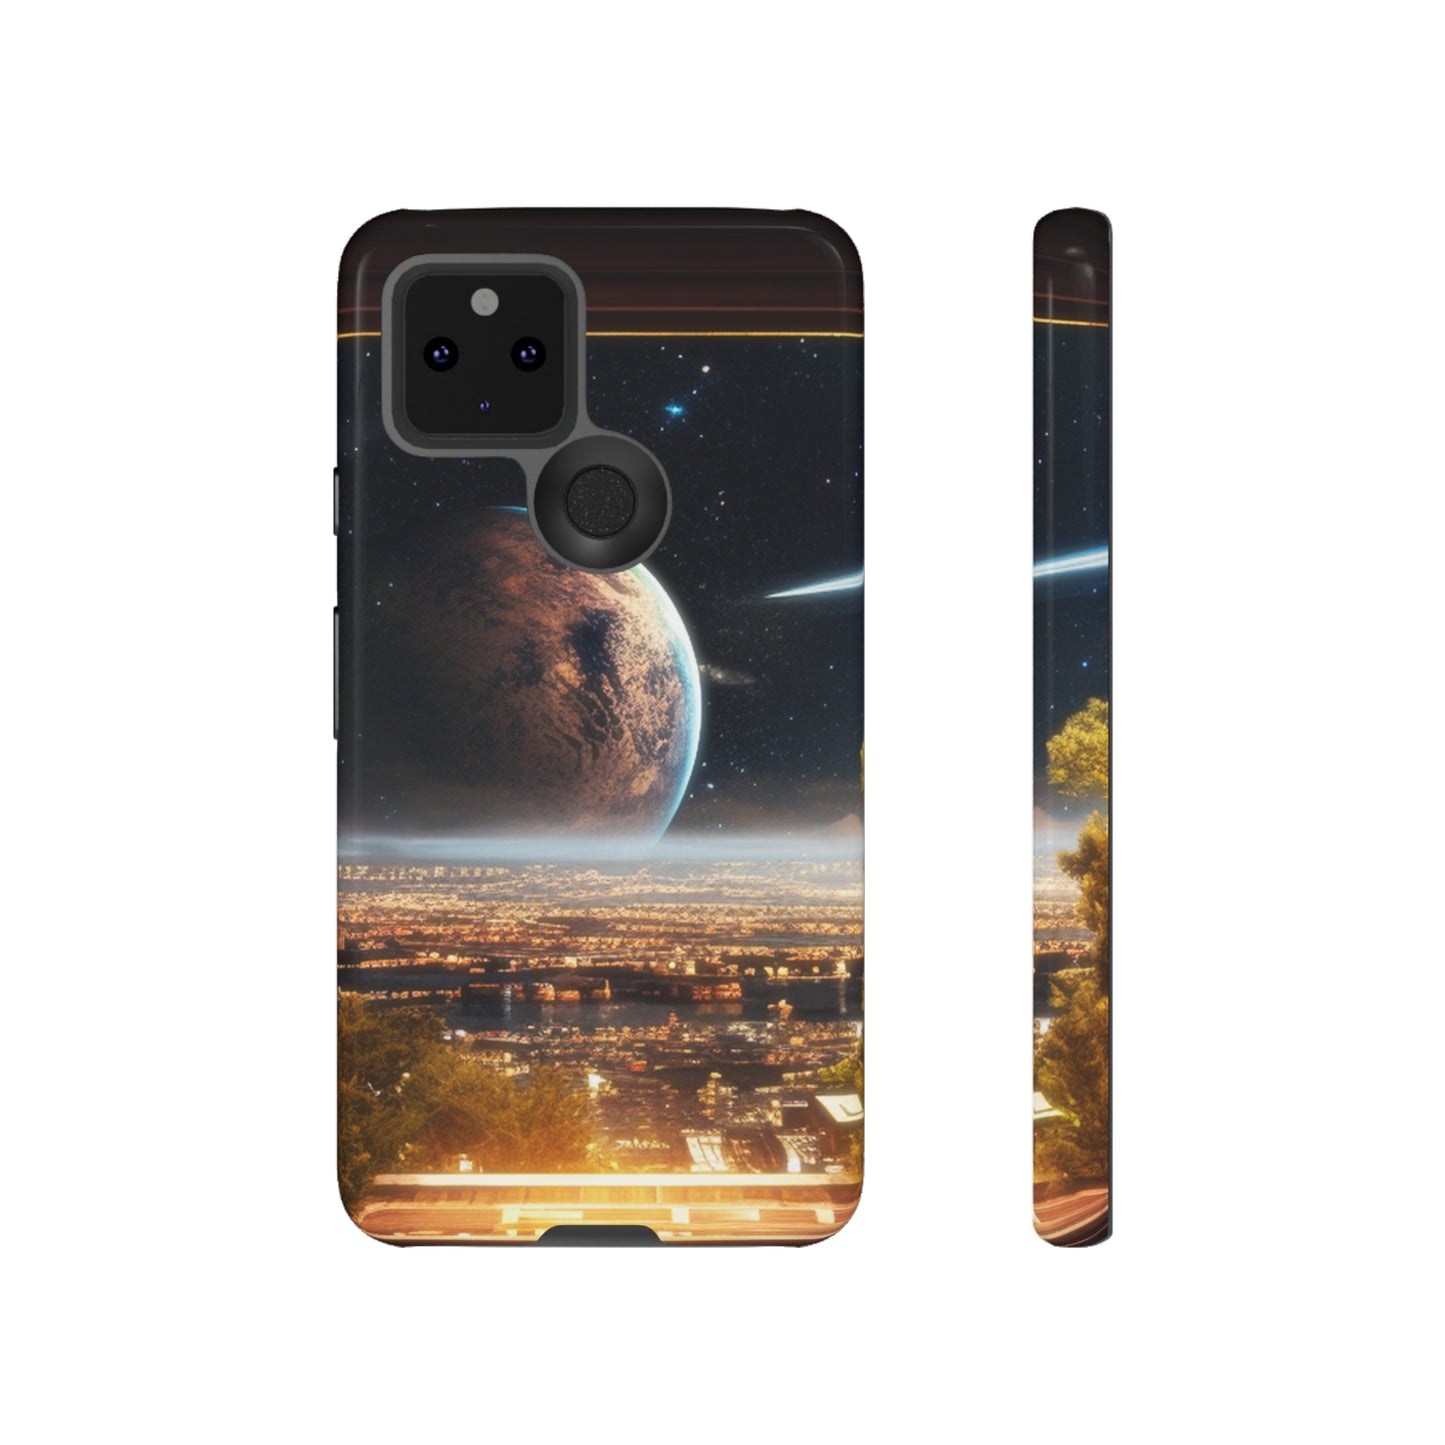 Planetview Tough Cases by Neduz Designs